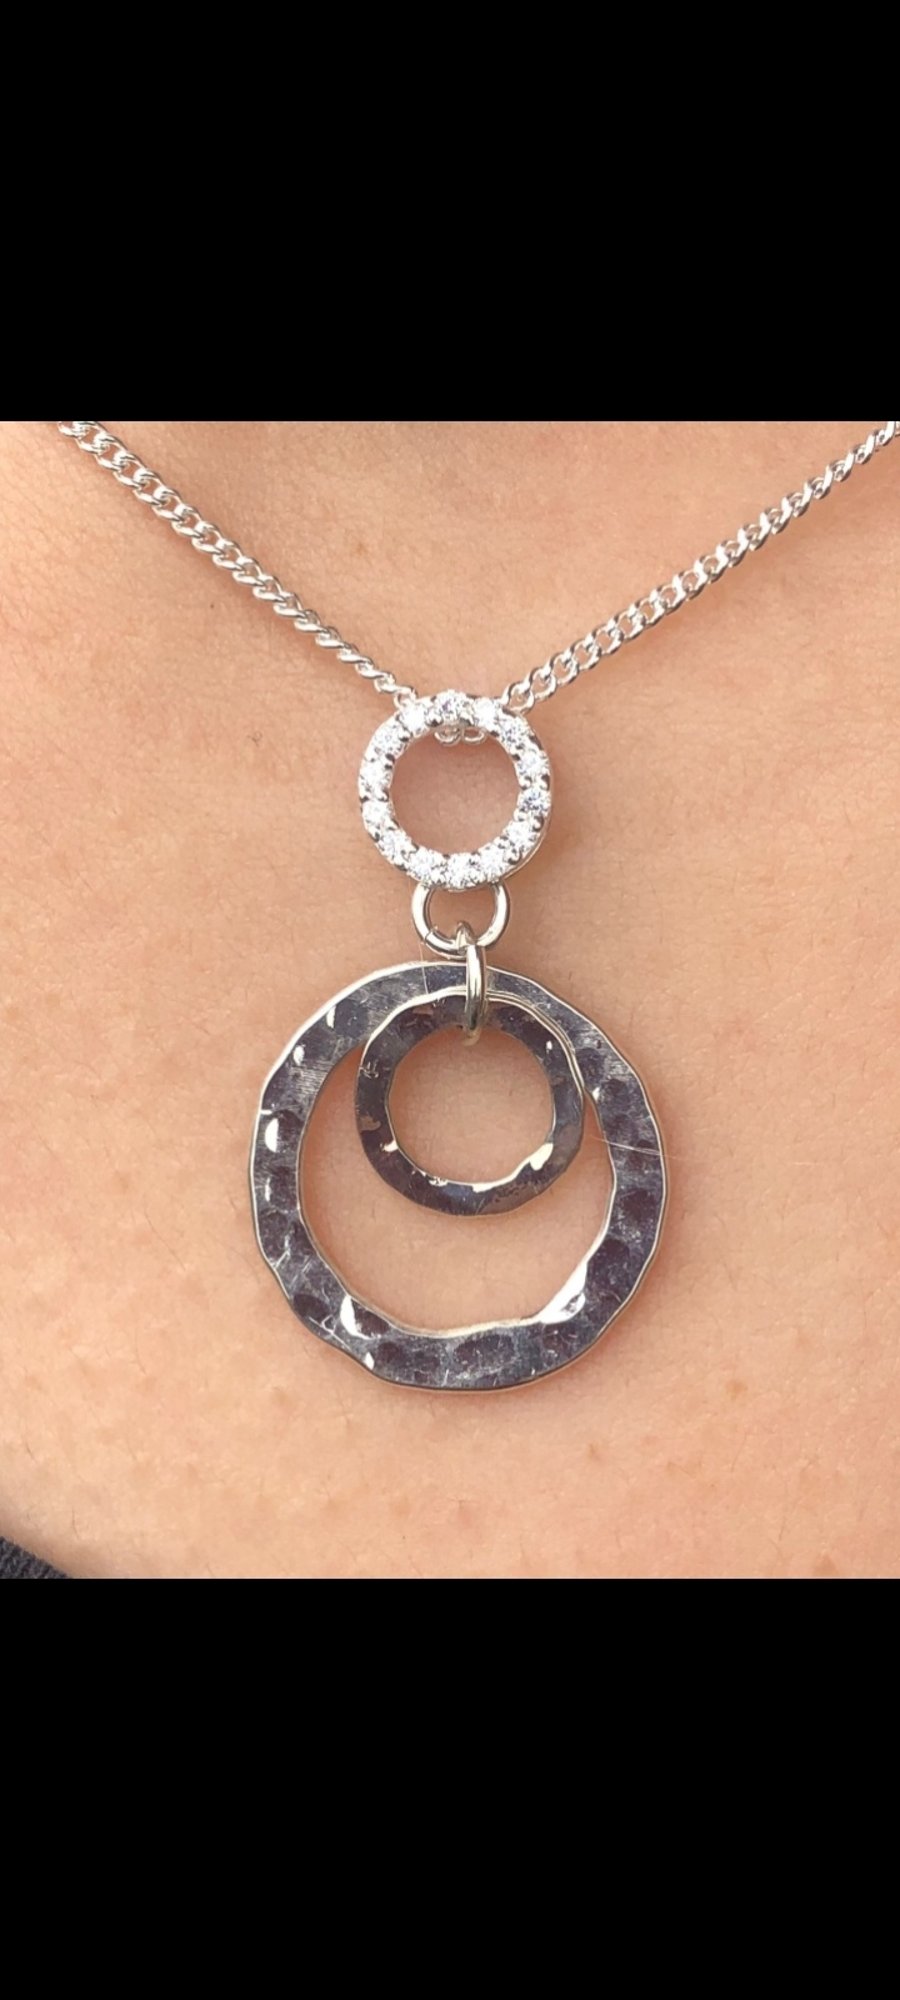 Sterling silver, stone set pendant